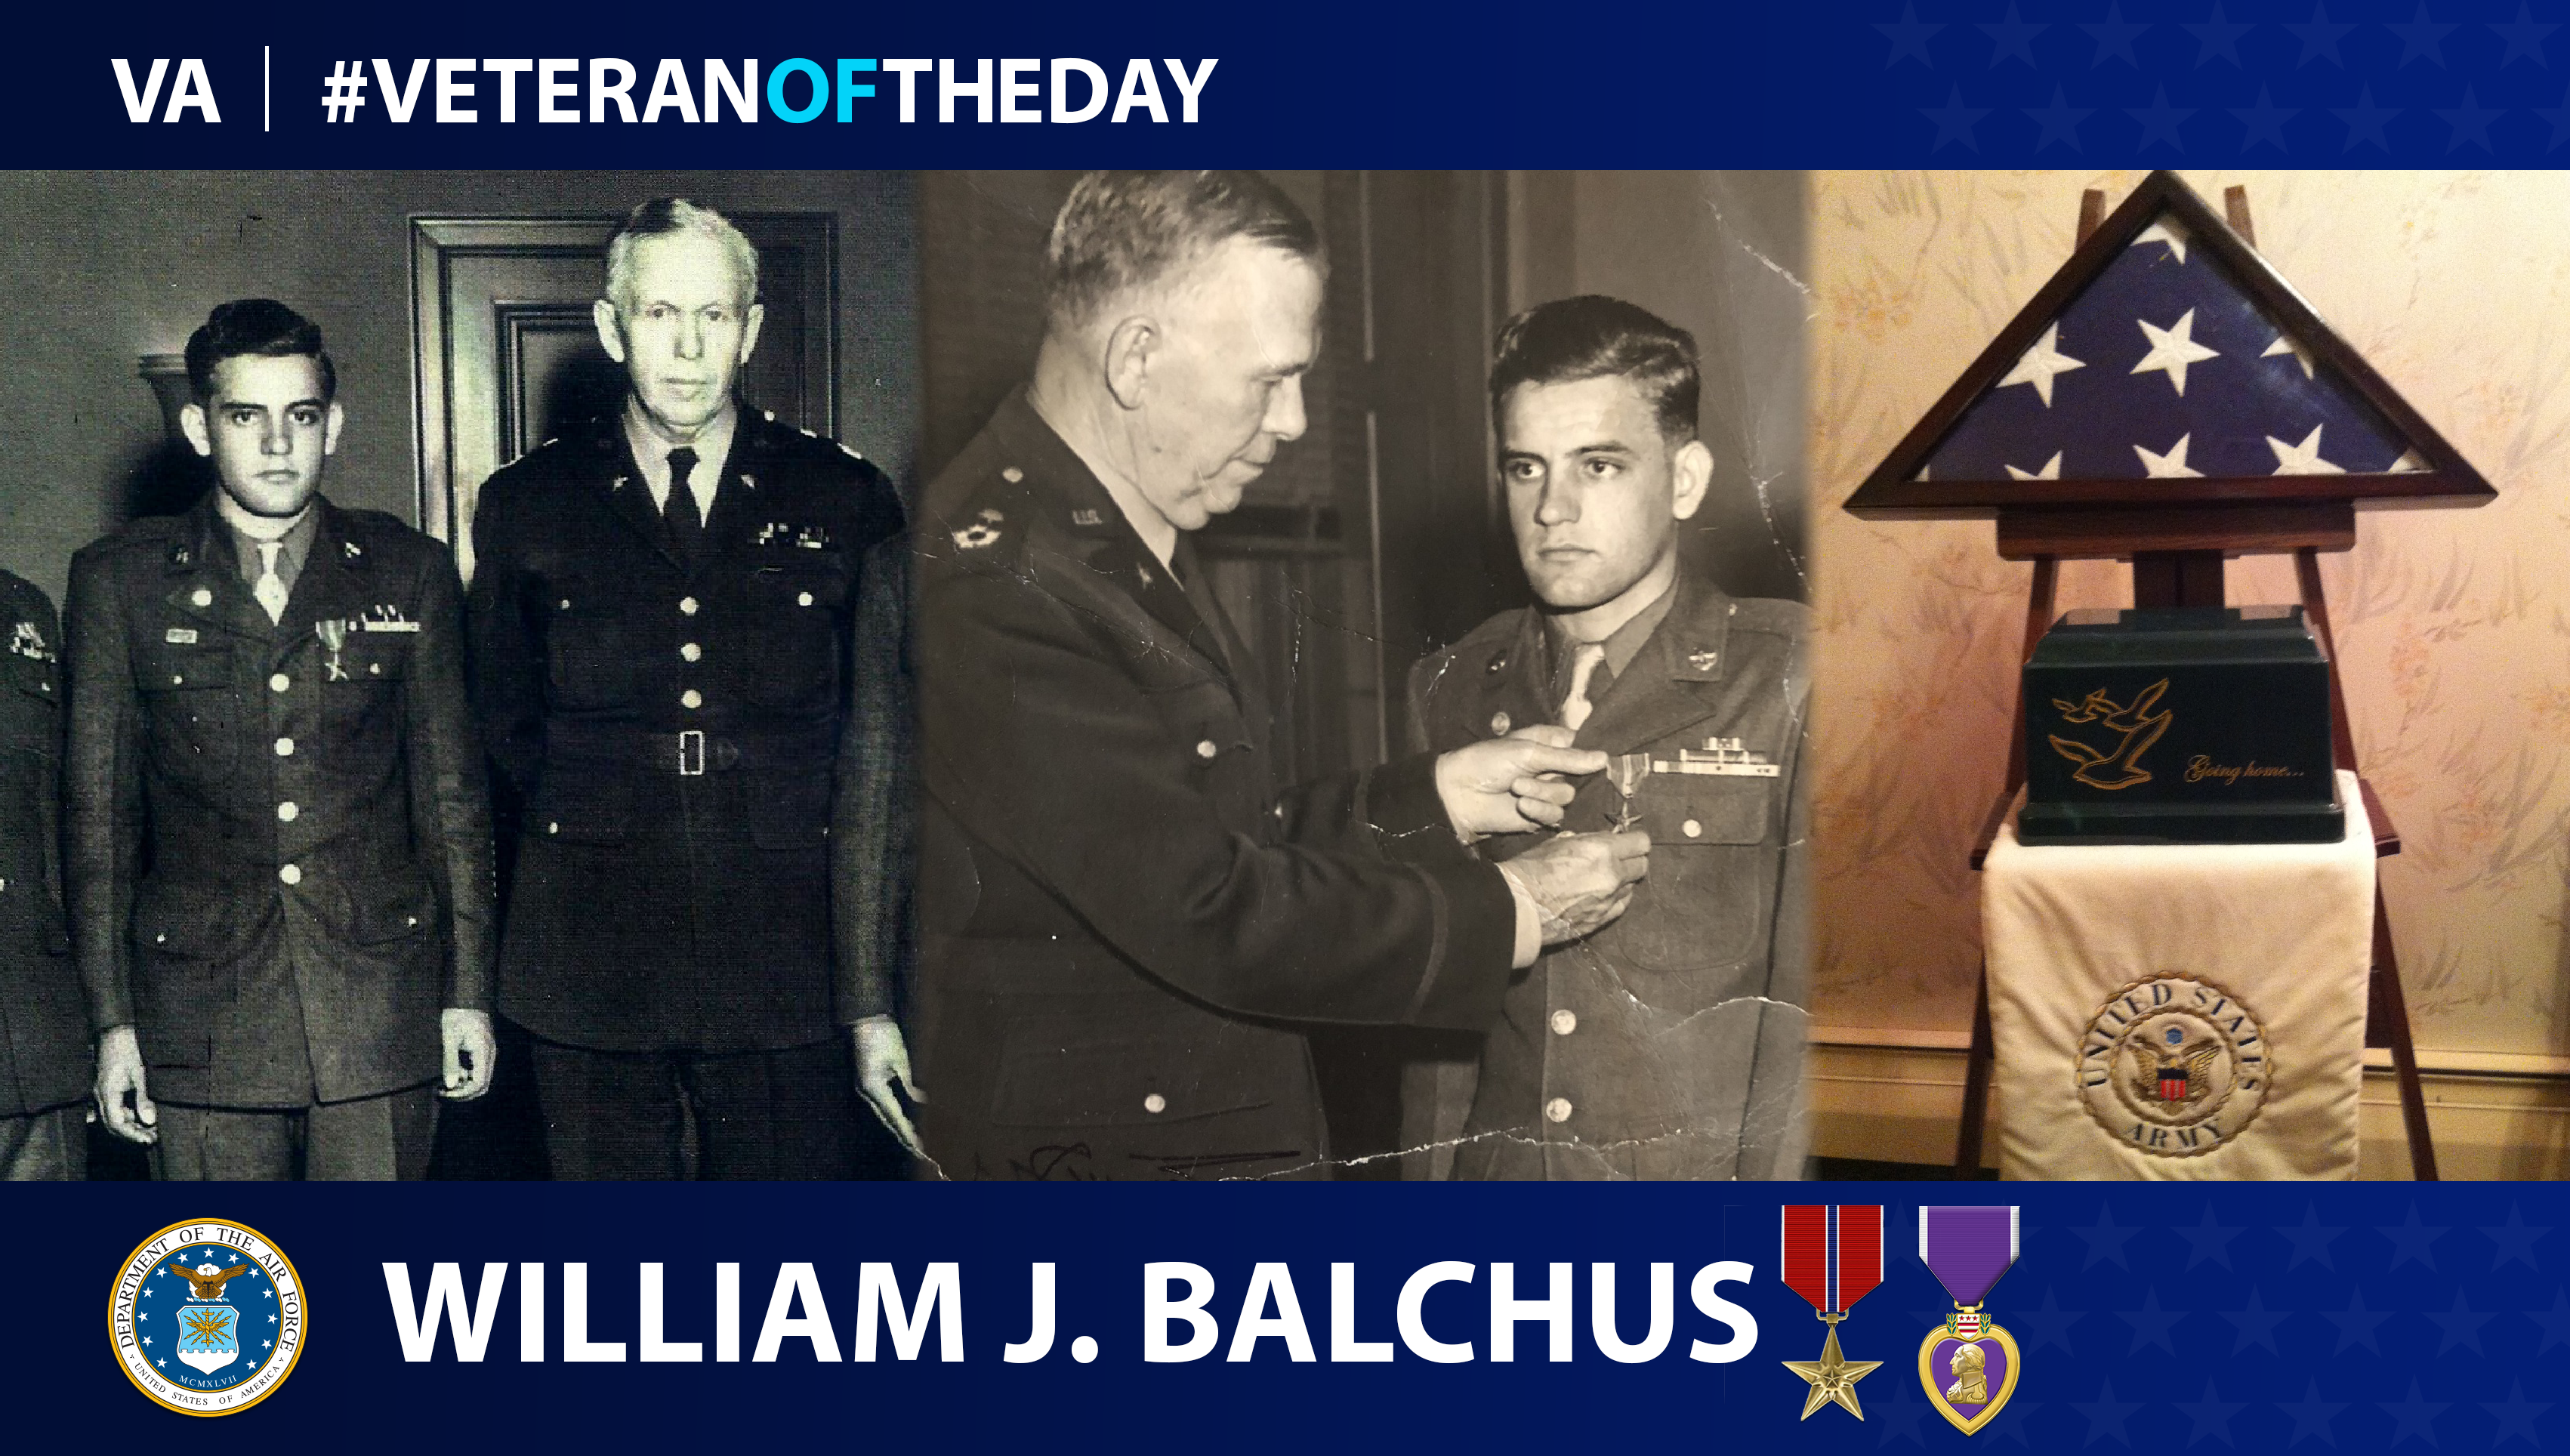 Army Veteran William J. Balchus is today's Veteran of the day.